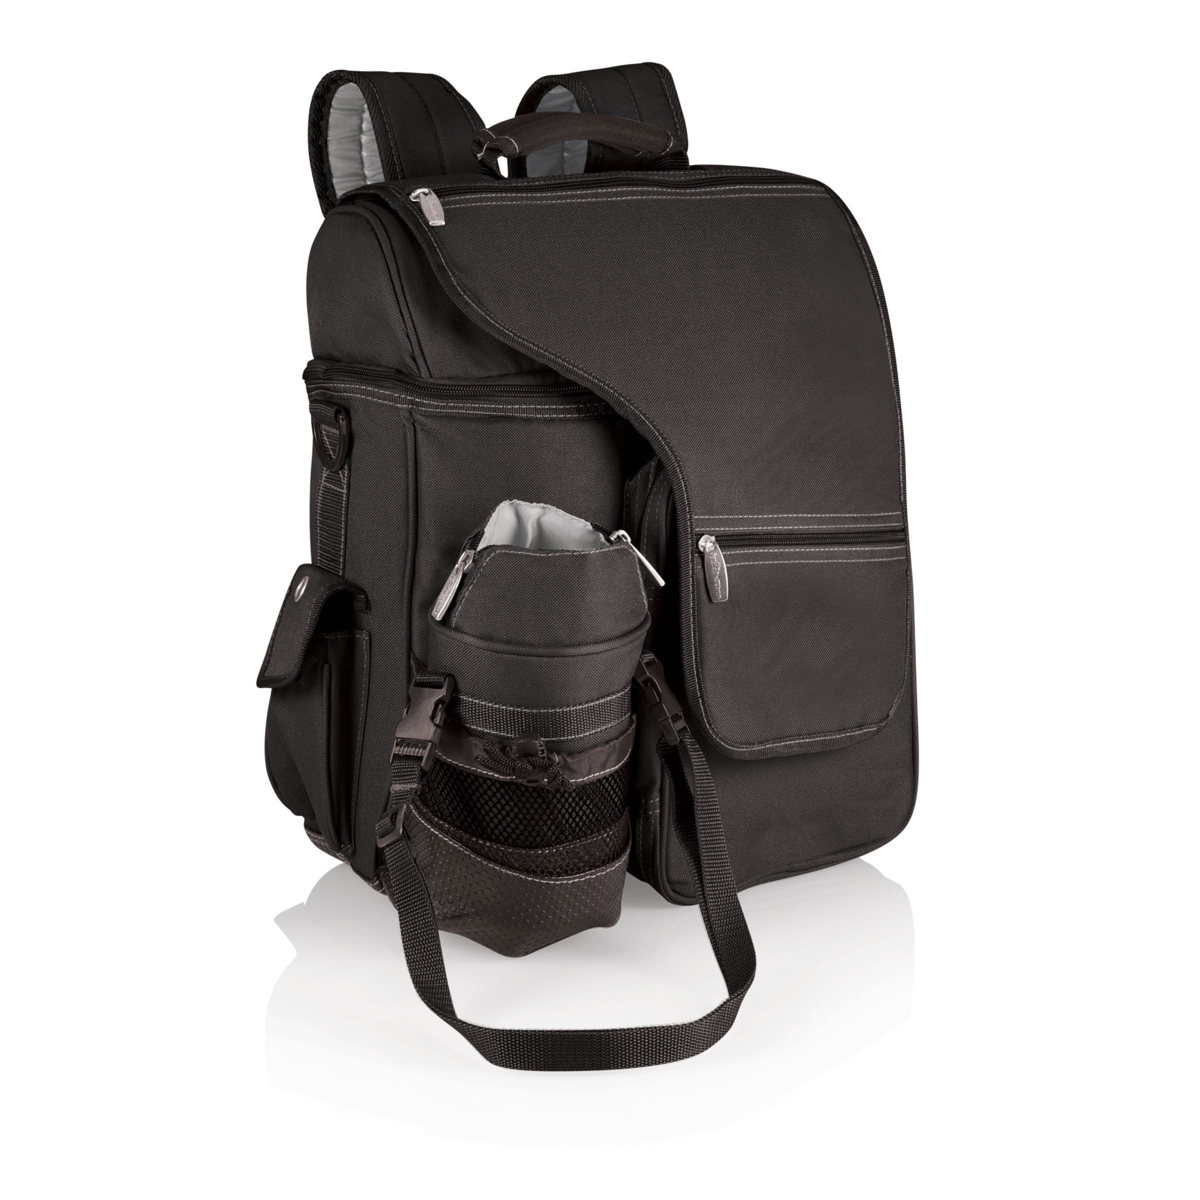 by Picnic Time Black Turismo Travel Backpack Cooler - Black